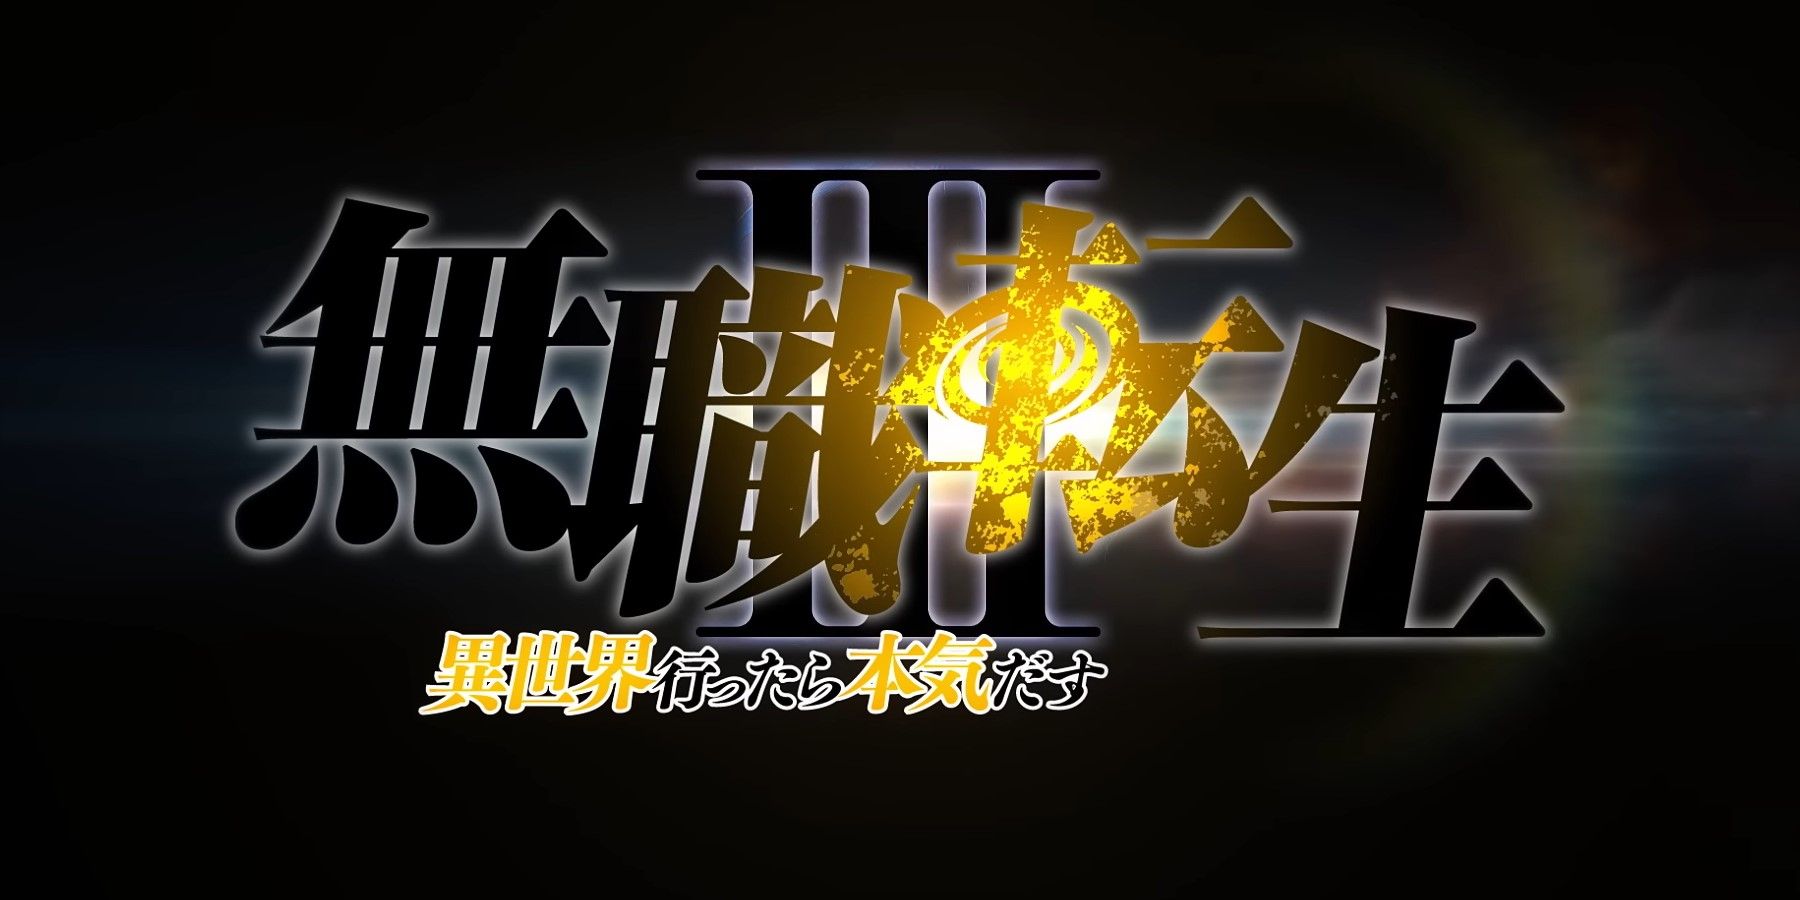 Mushoku Tensei Season 3 Announcement